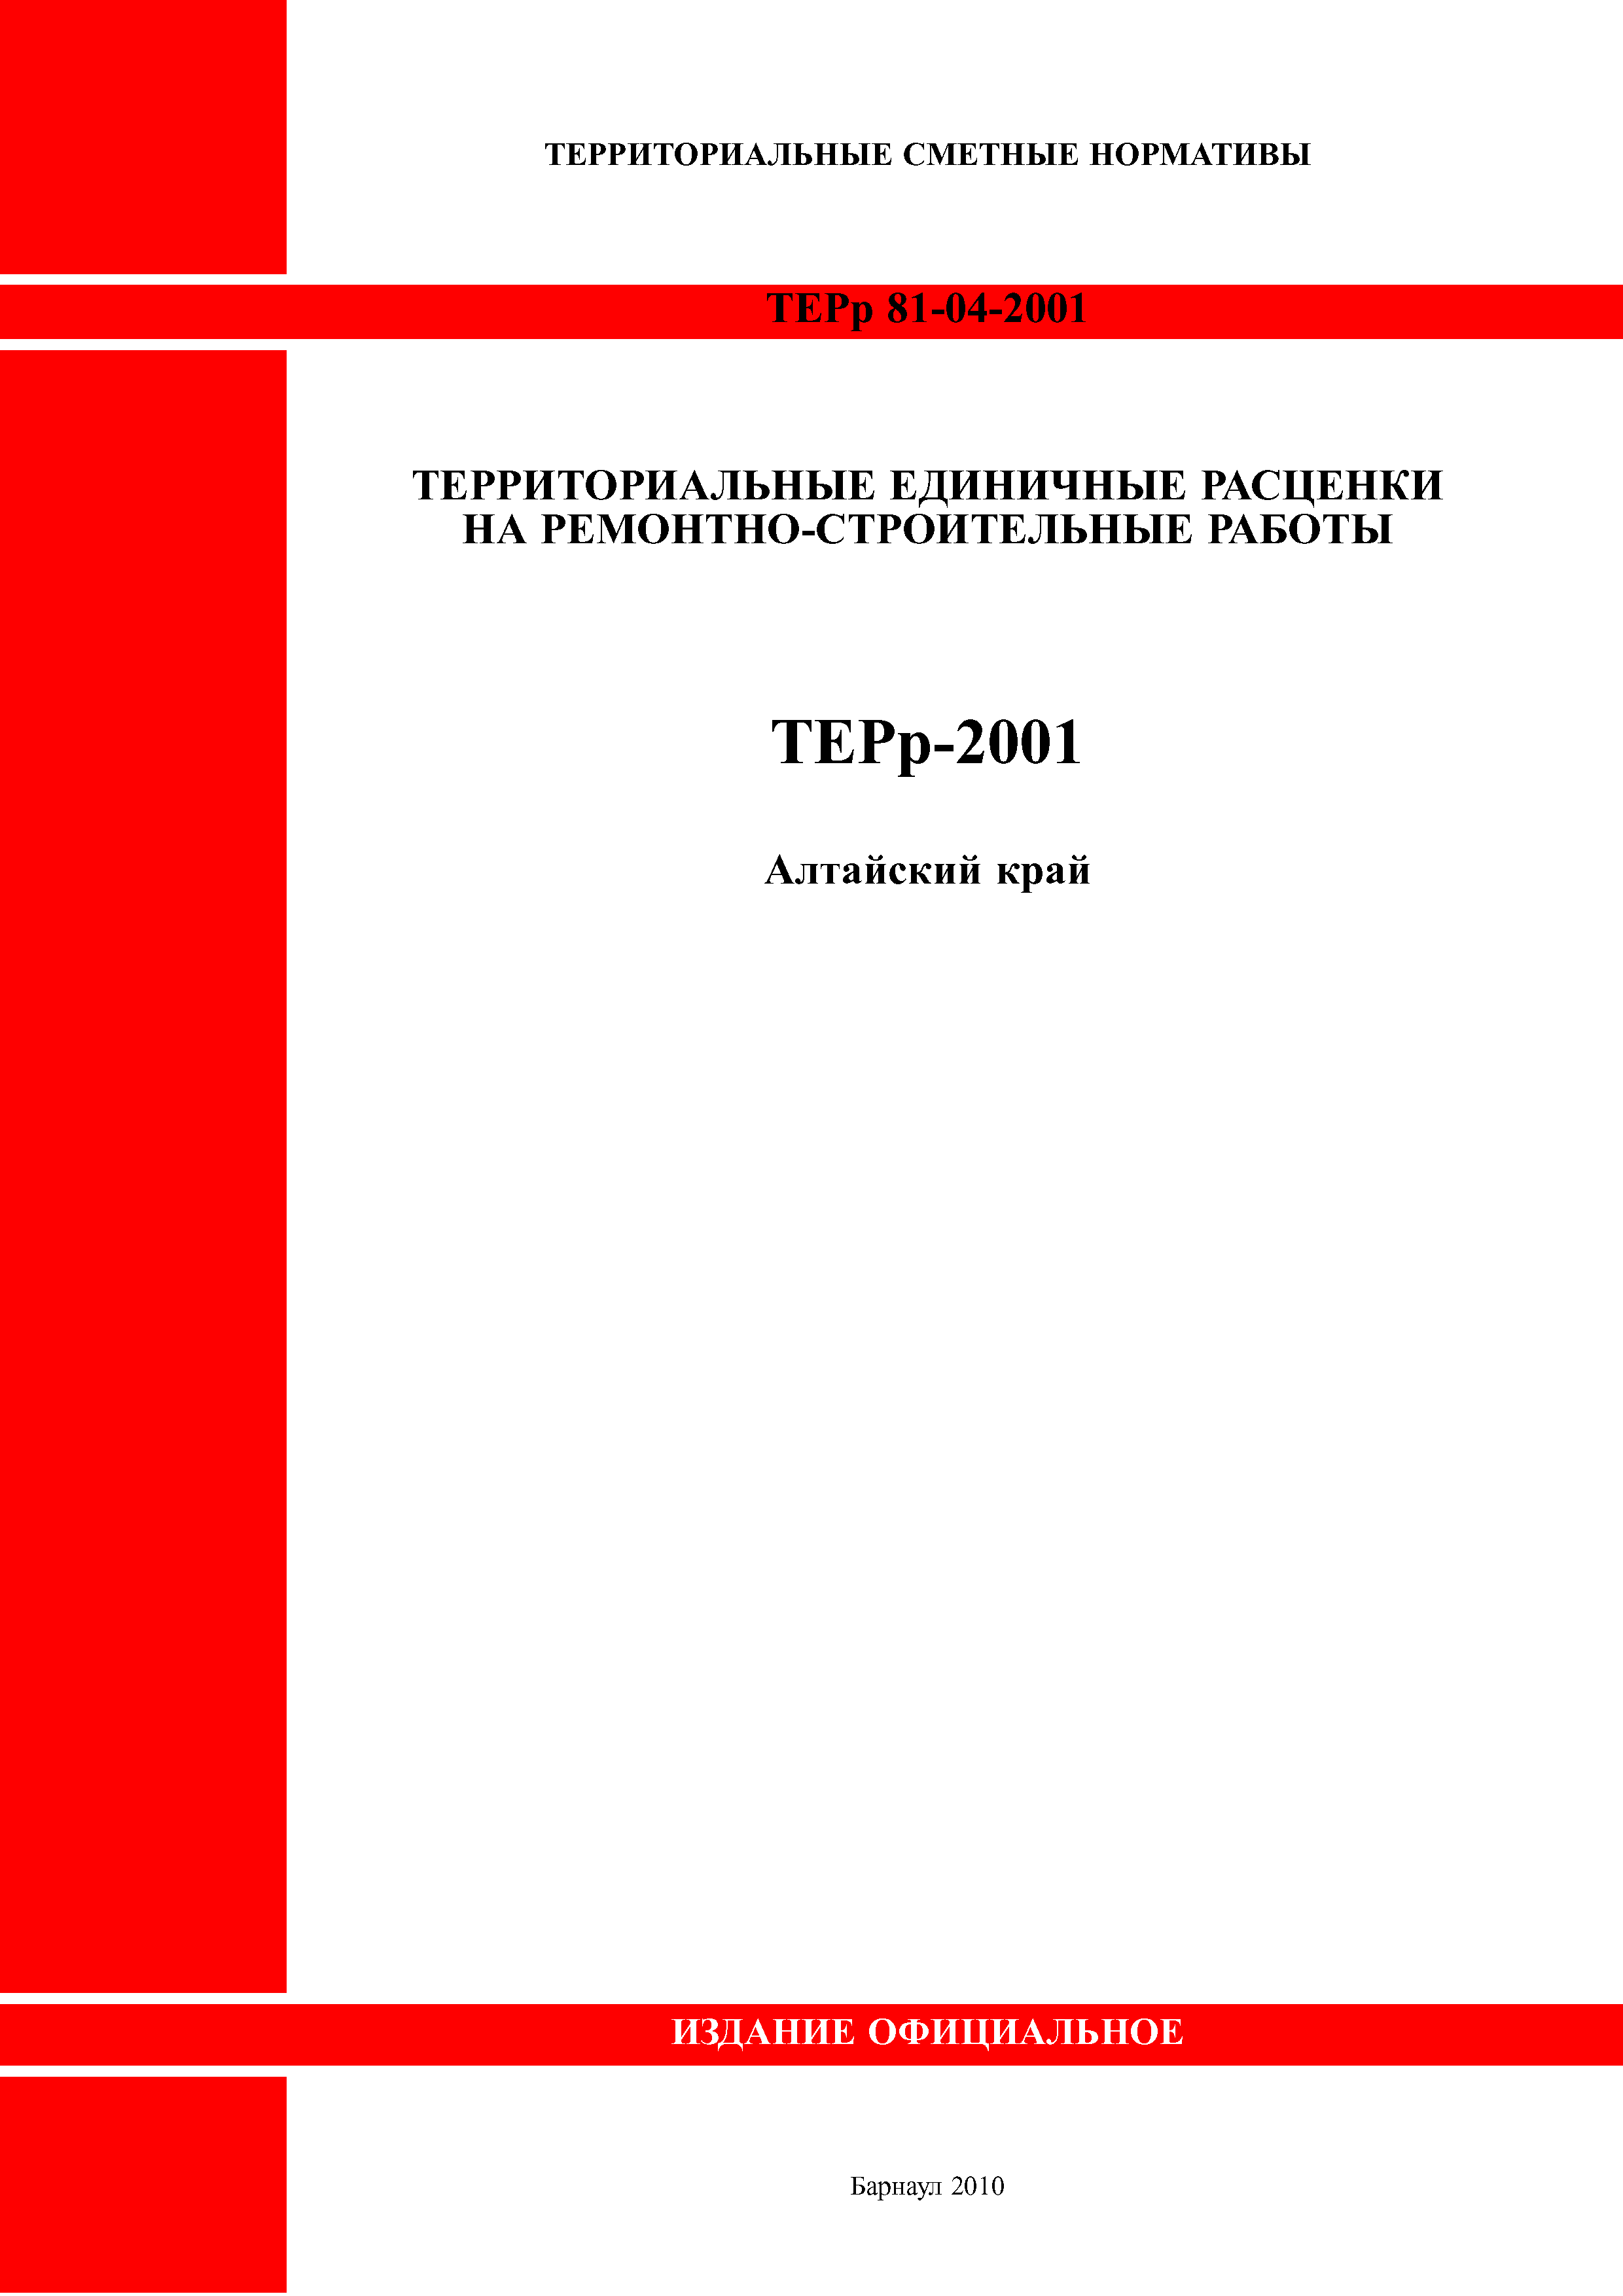 ТЕРр Алтайский край 2001